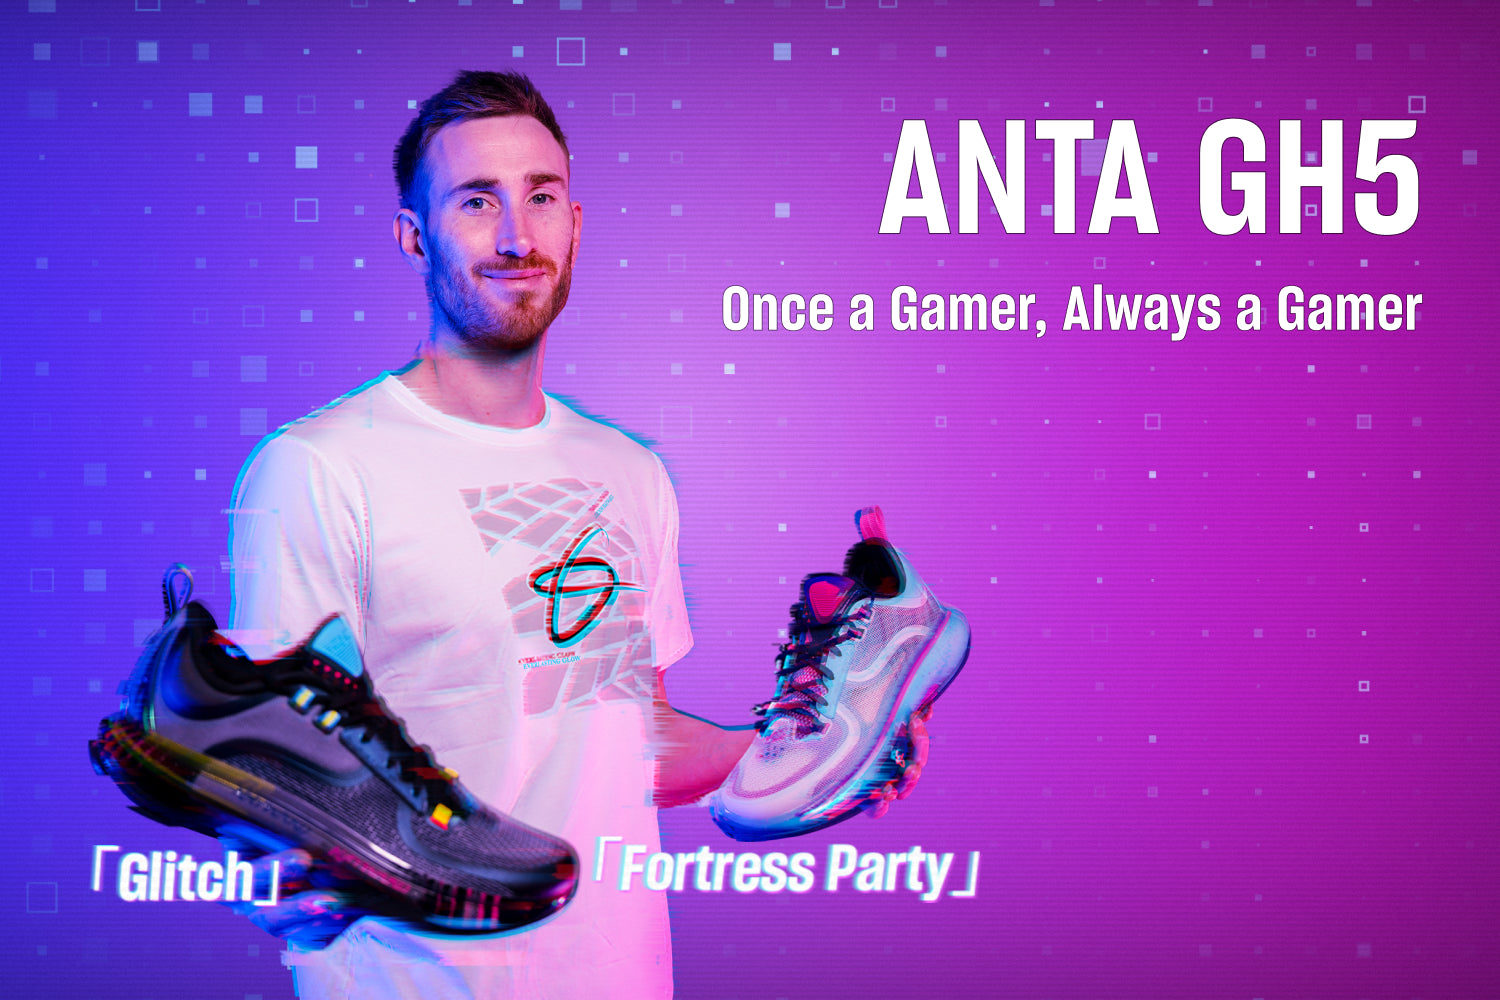 ANTA GH5 Basketball Shoes - Gordon Hayward